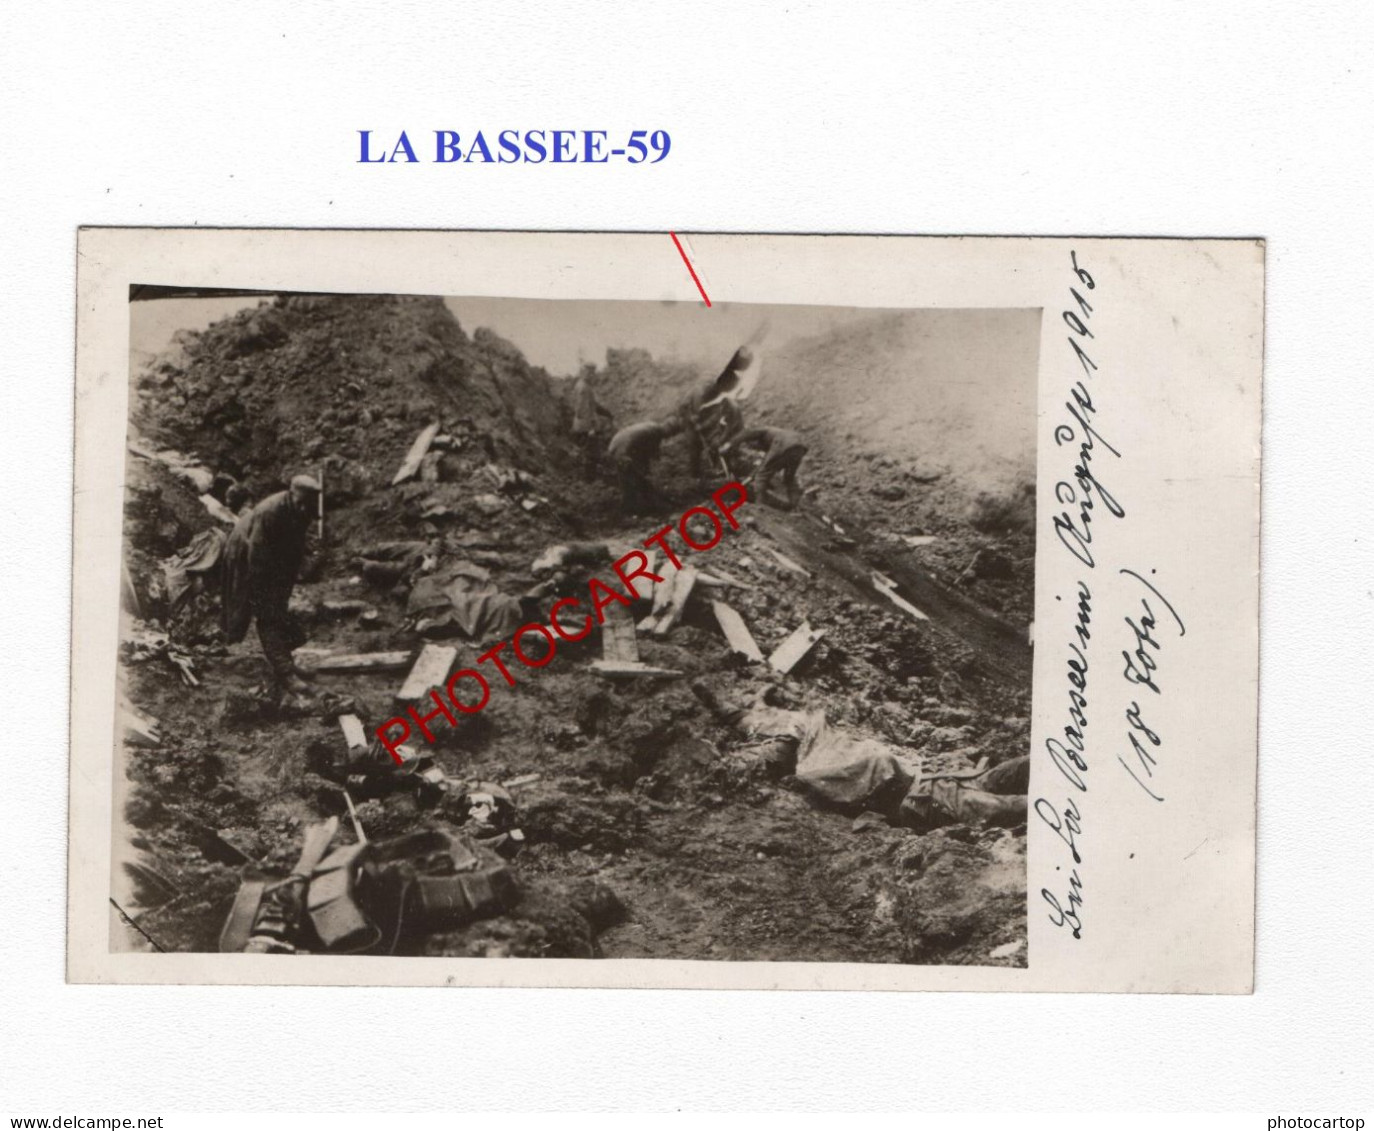 LA BASSEE-59-Tranchee-CADAVRES-18x MORTS-Aout 1915-CARTE PHOTO Allemande-GUERRE 14-18-1 WK-MILITARIA- - Weltkrieg 1914-18